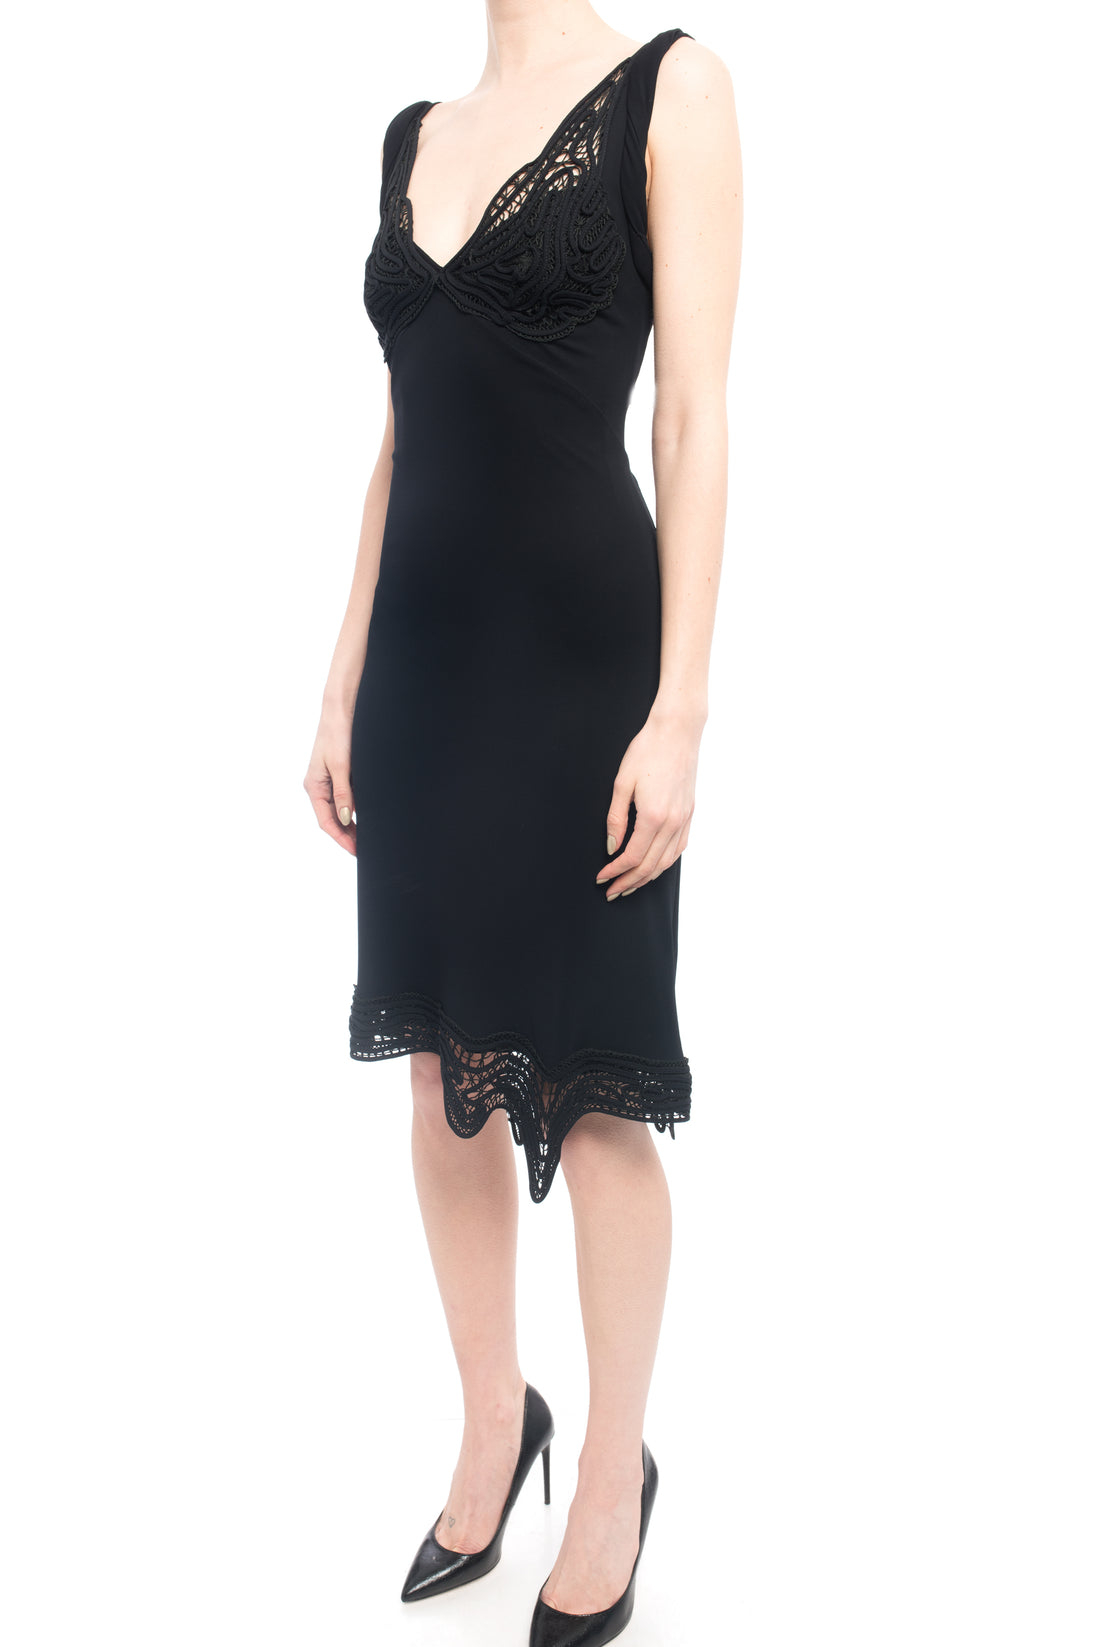 Jean Paul Gaultier Femme Black Jersey Dress with Lace Trim - S